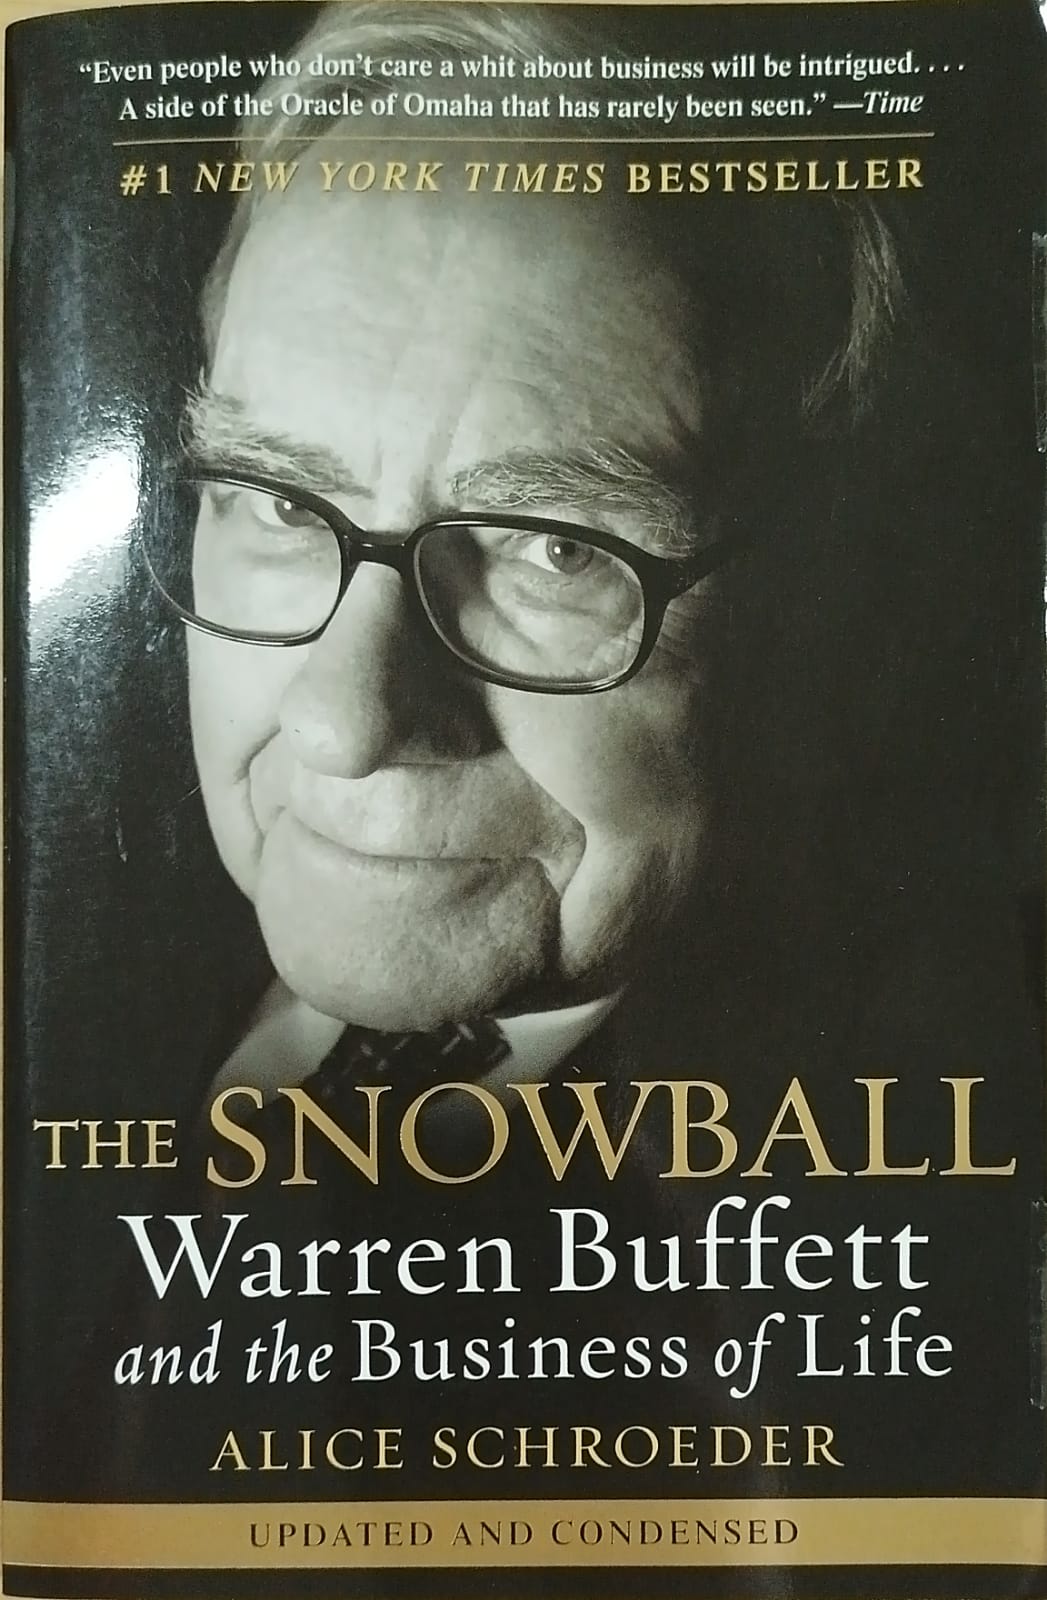 The snowball: warren buffett and the business of life